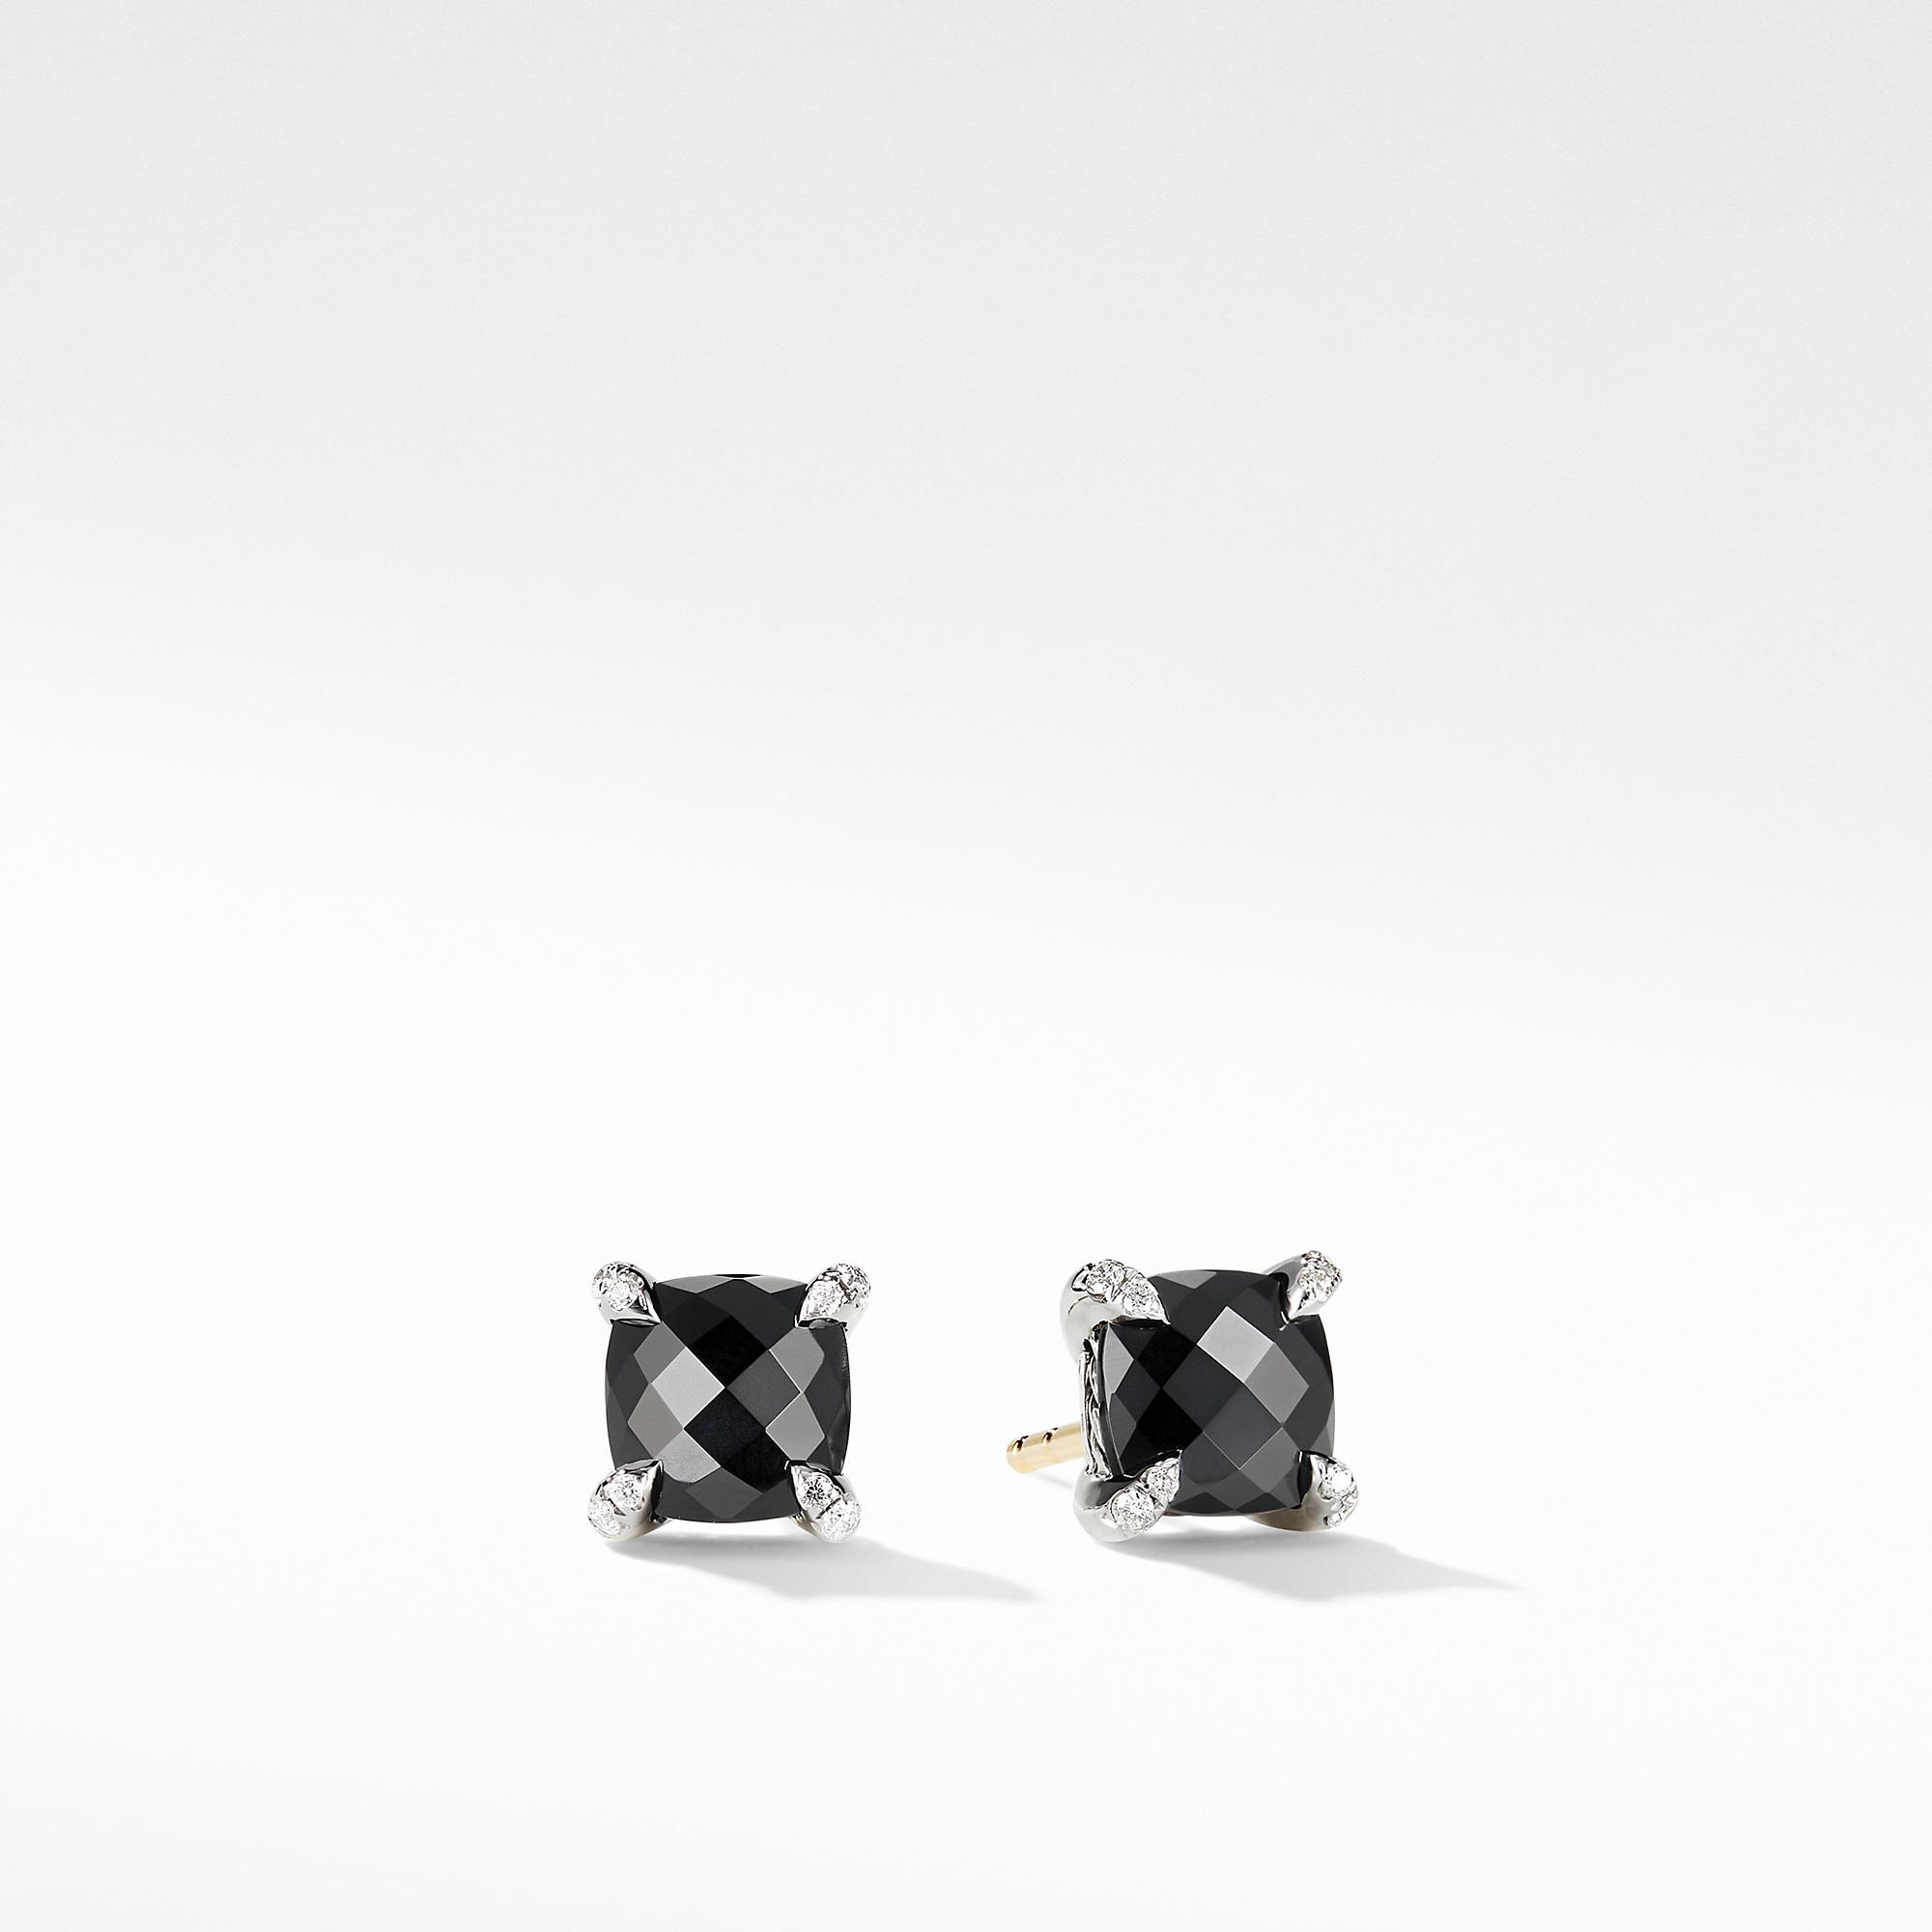 David Yurman Petite Chatelaine Stud Earrings with Black Onyx and Diamonds